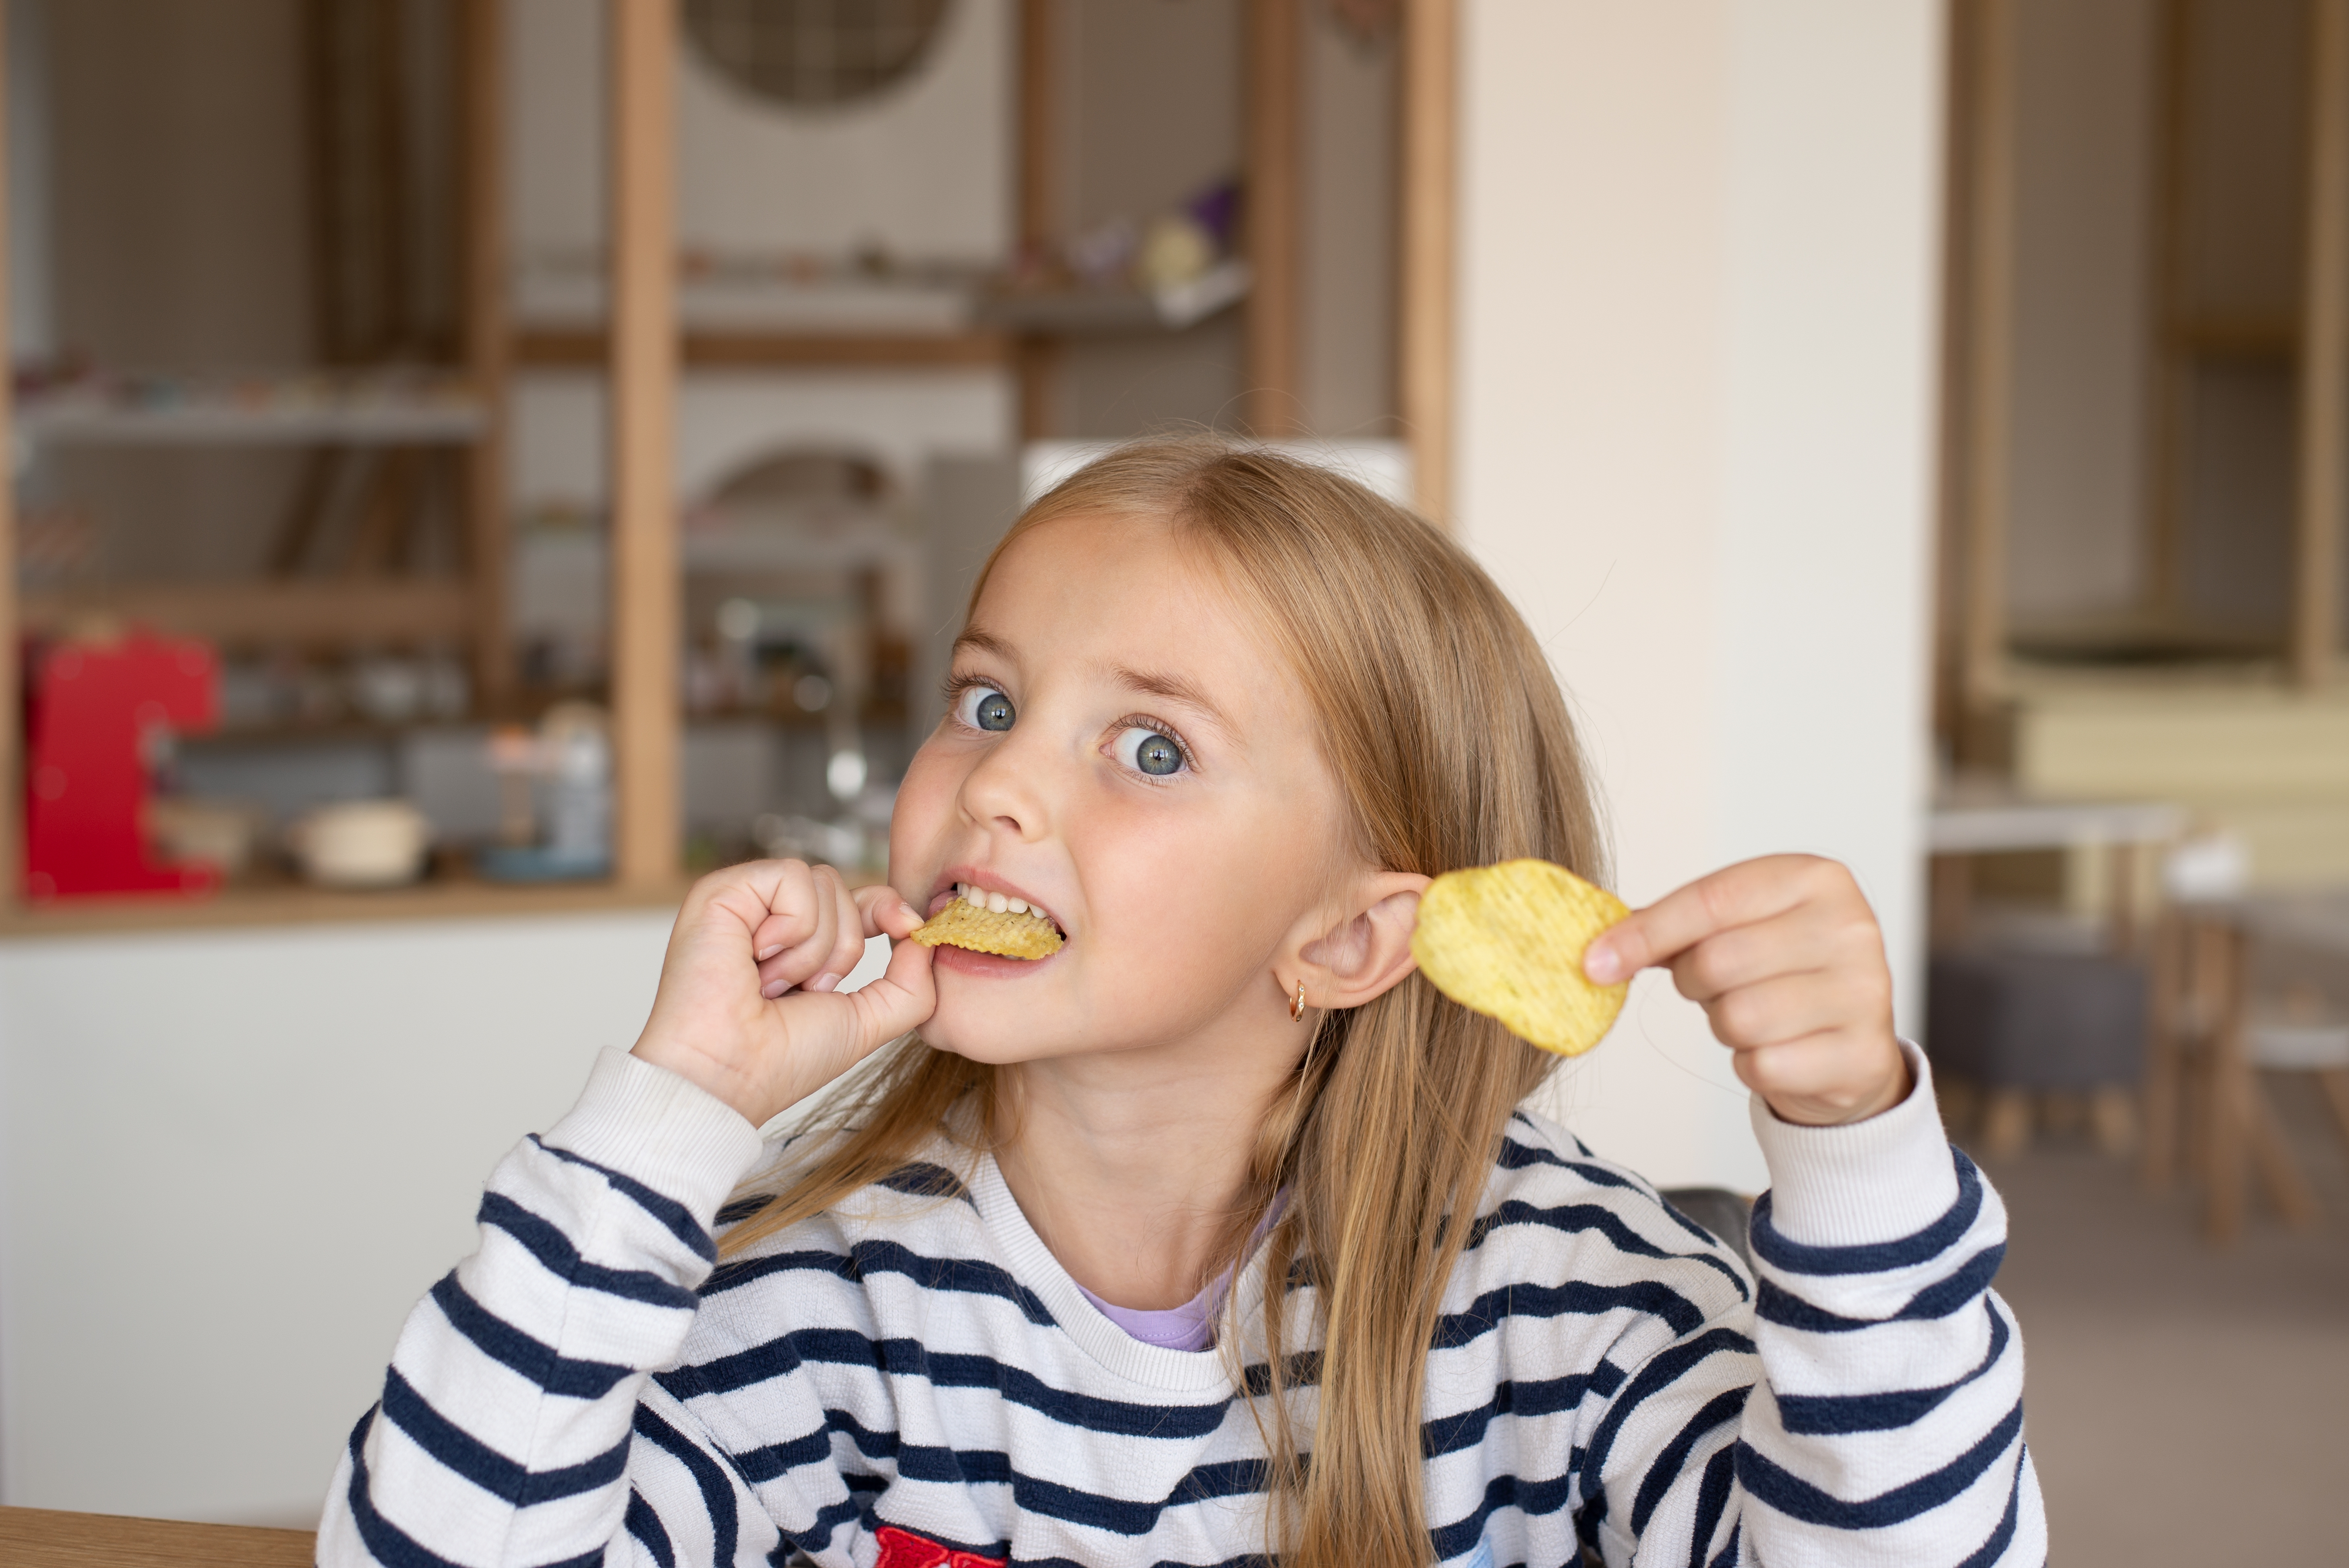 A little girl eating potato chips | Source: Shutterstock